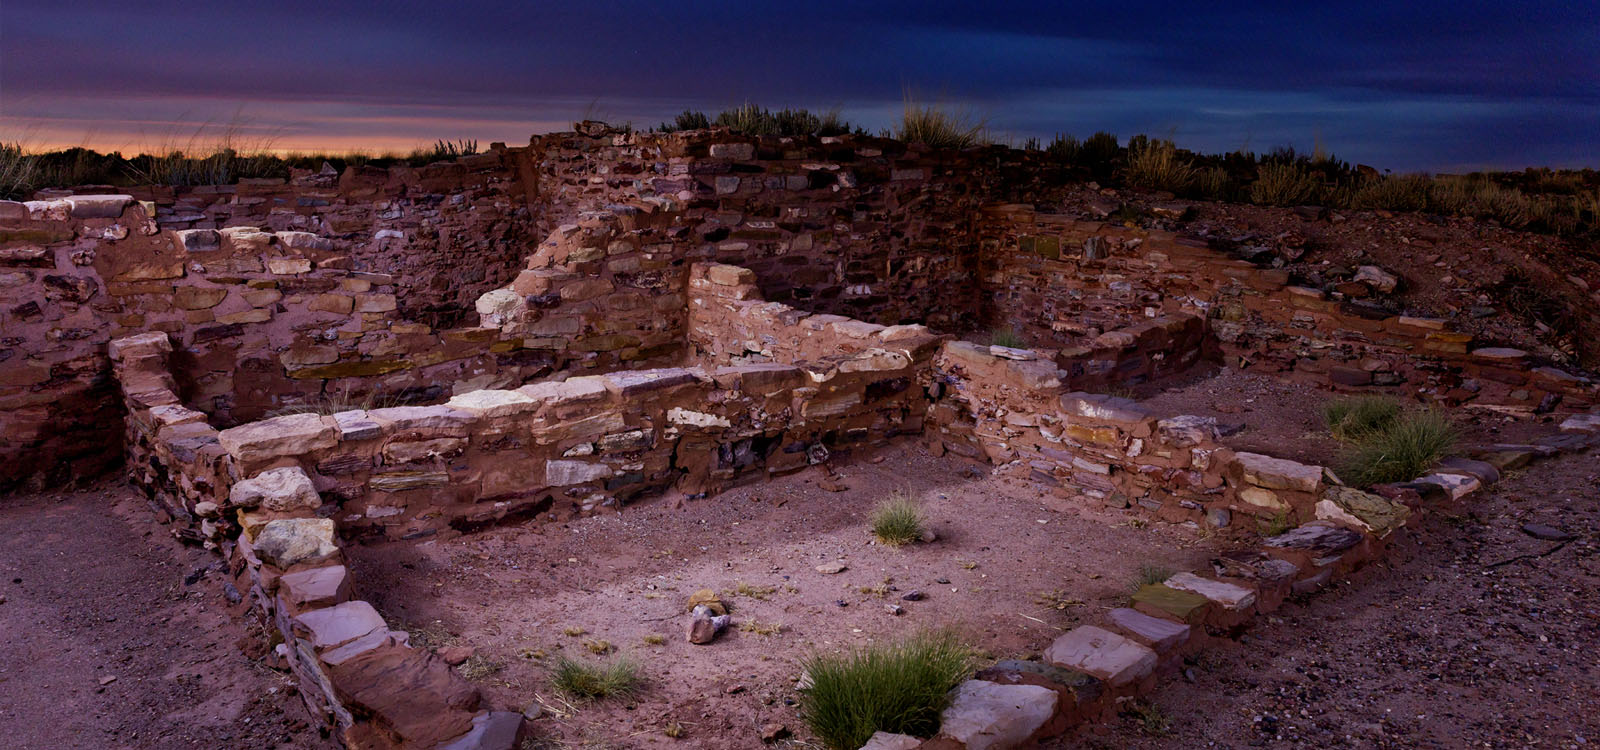 Some of the Hopi ruins at Homolovi State Park